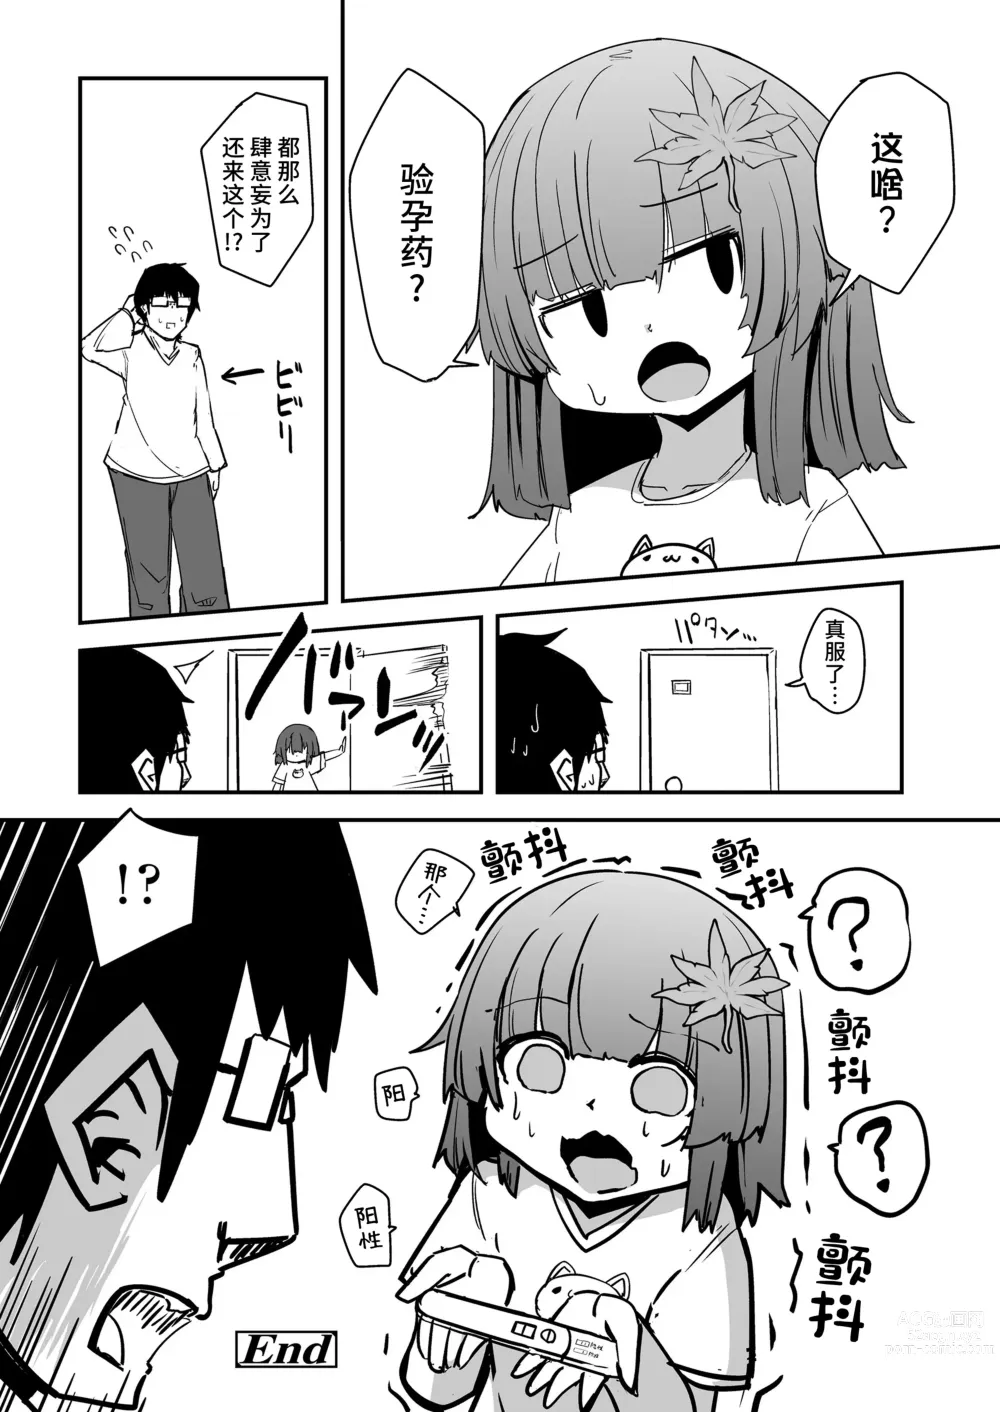 Page 43 of manga Oshiete Kureha-san 1+2